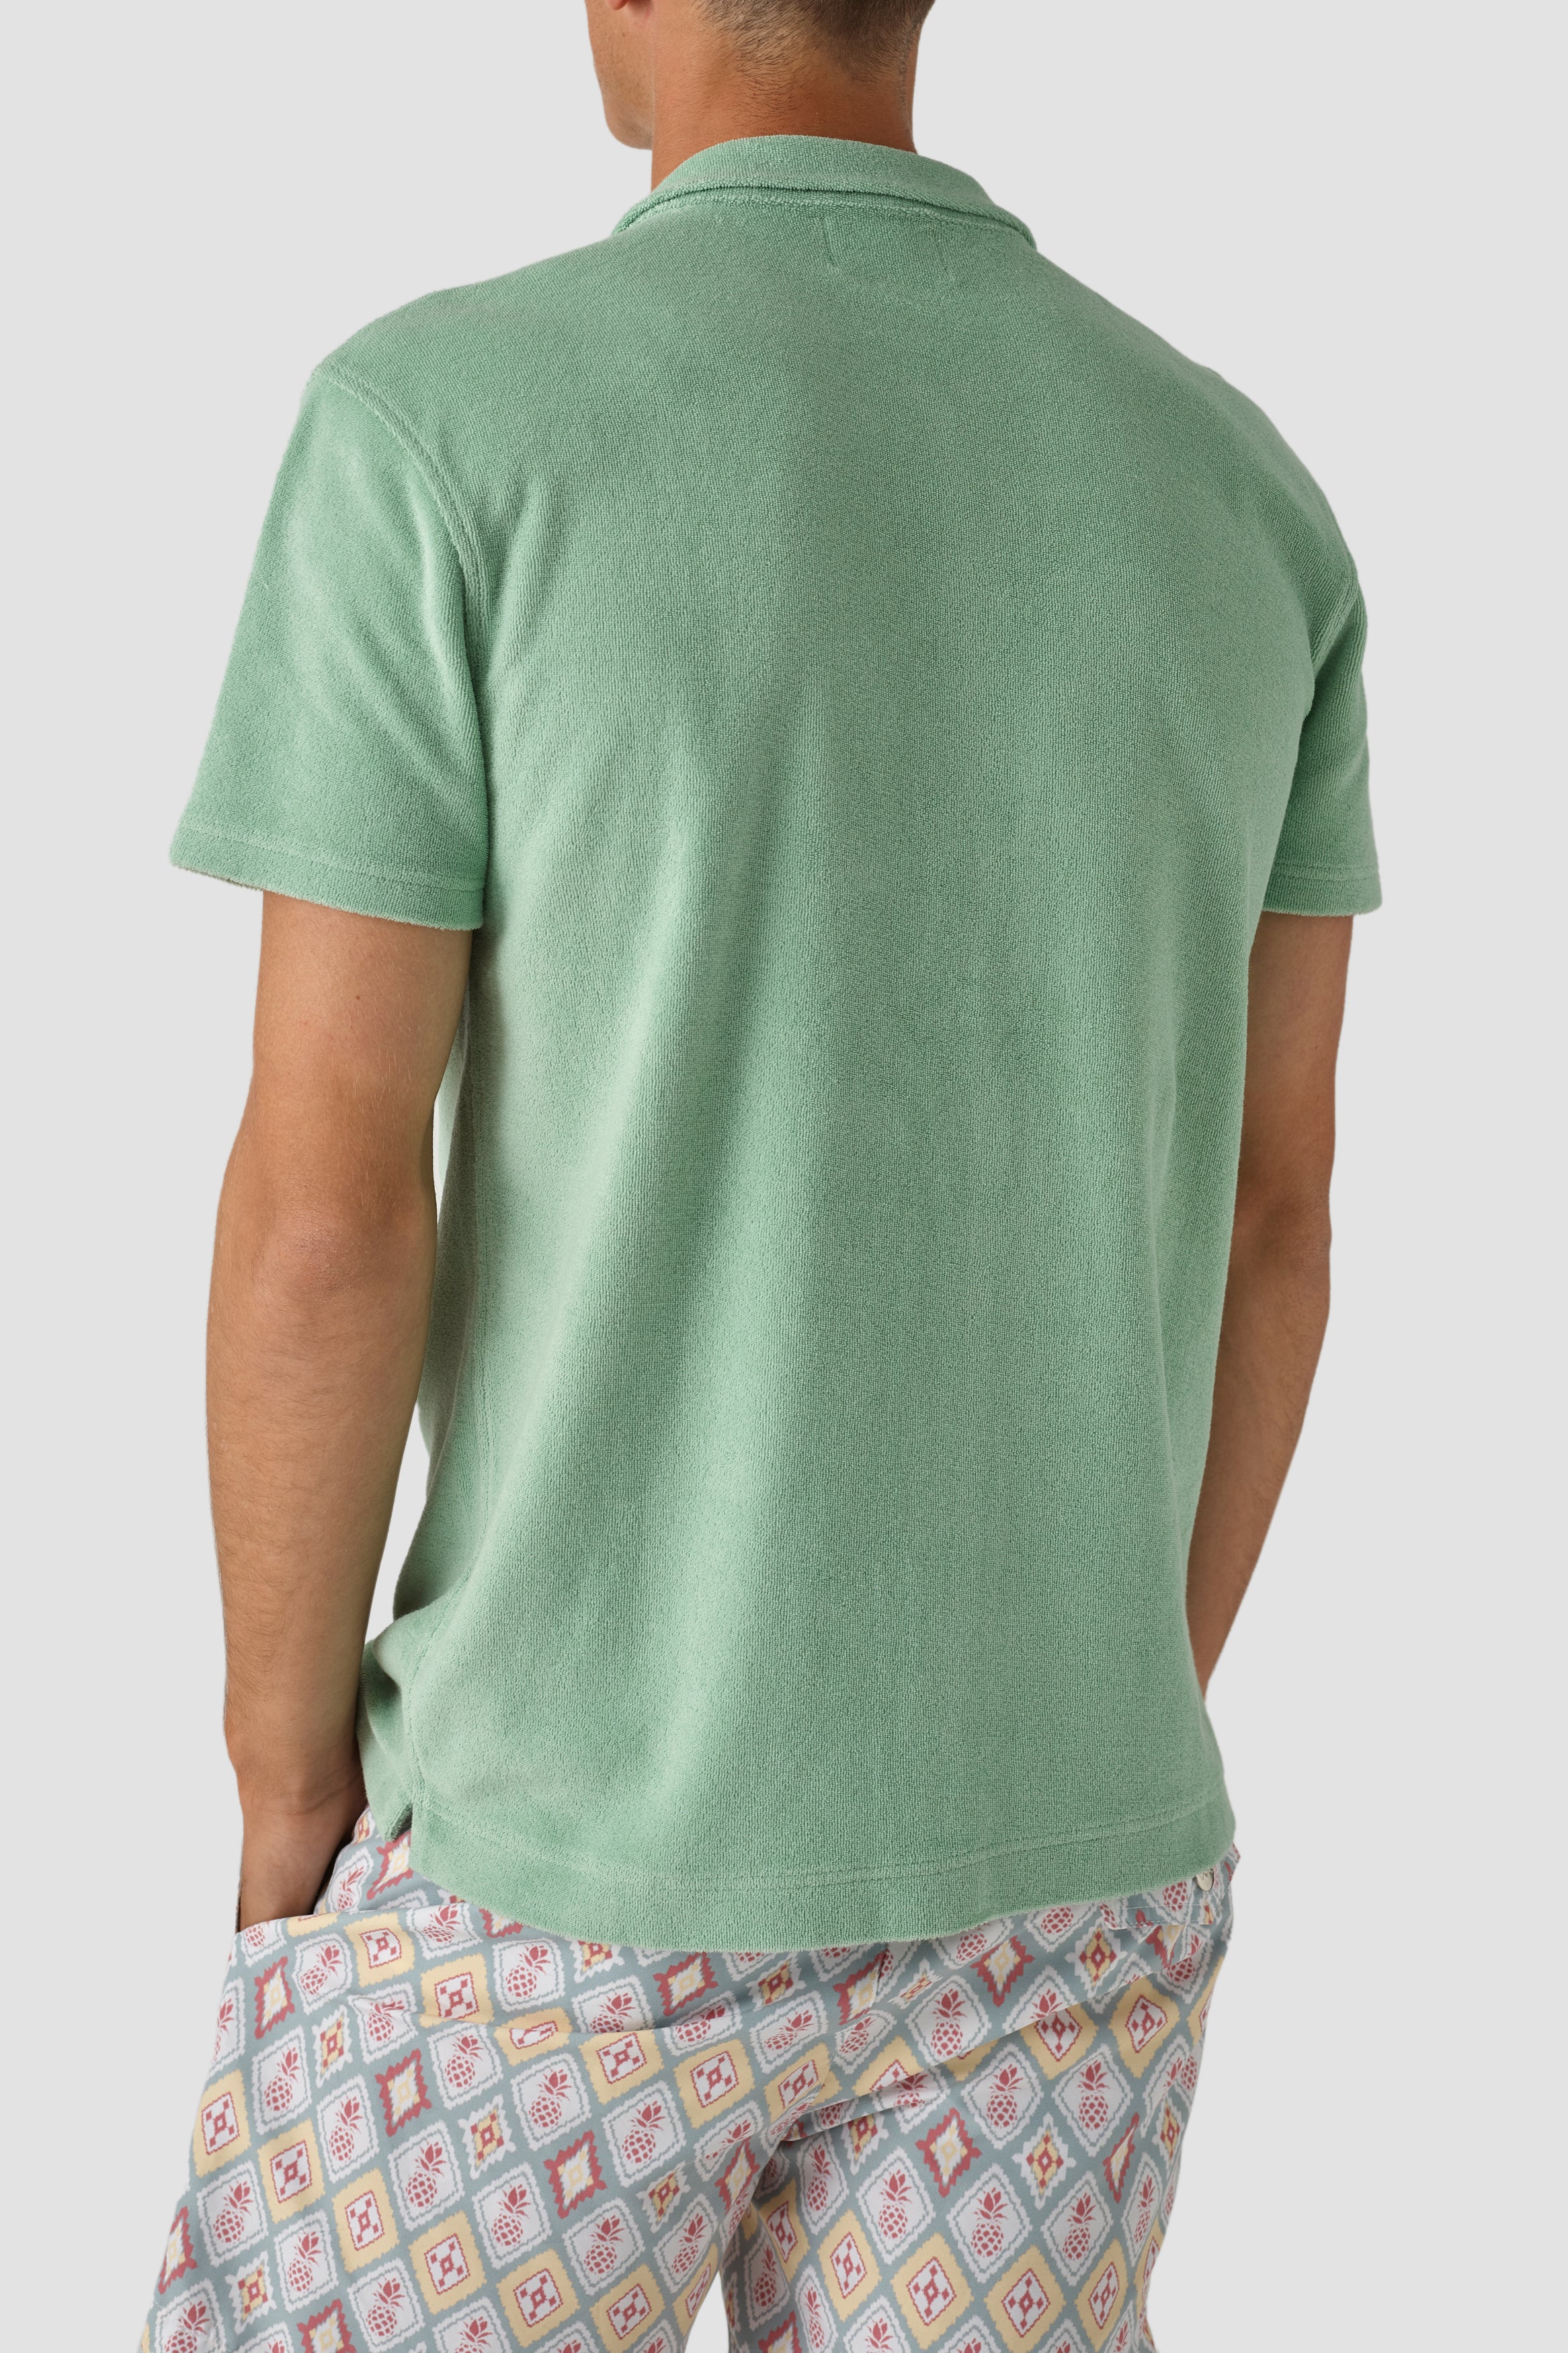 Mr Oscar TW Shirt Aqua Green